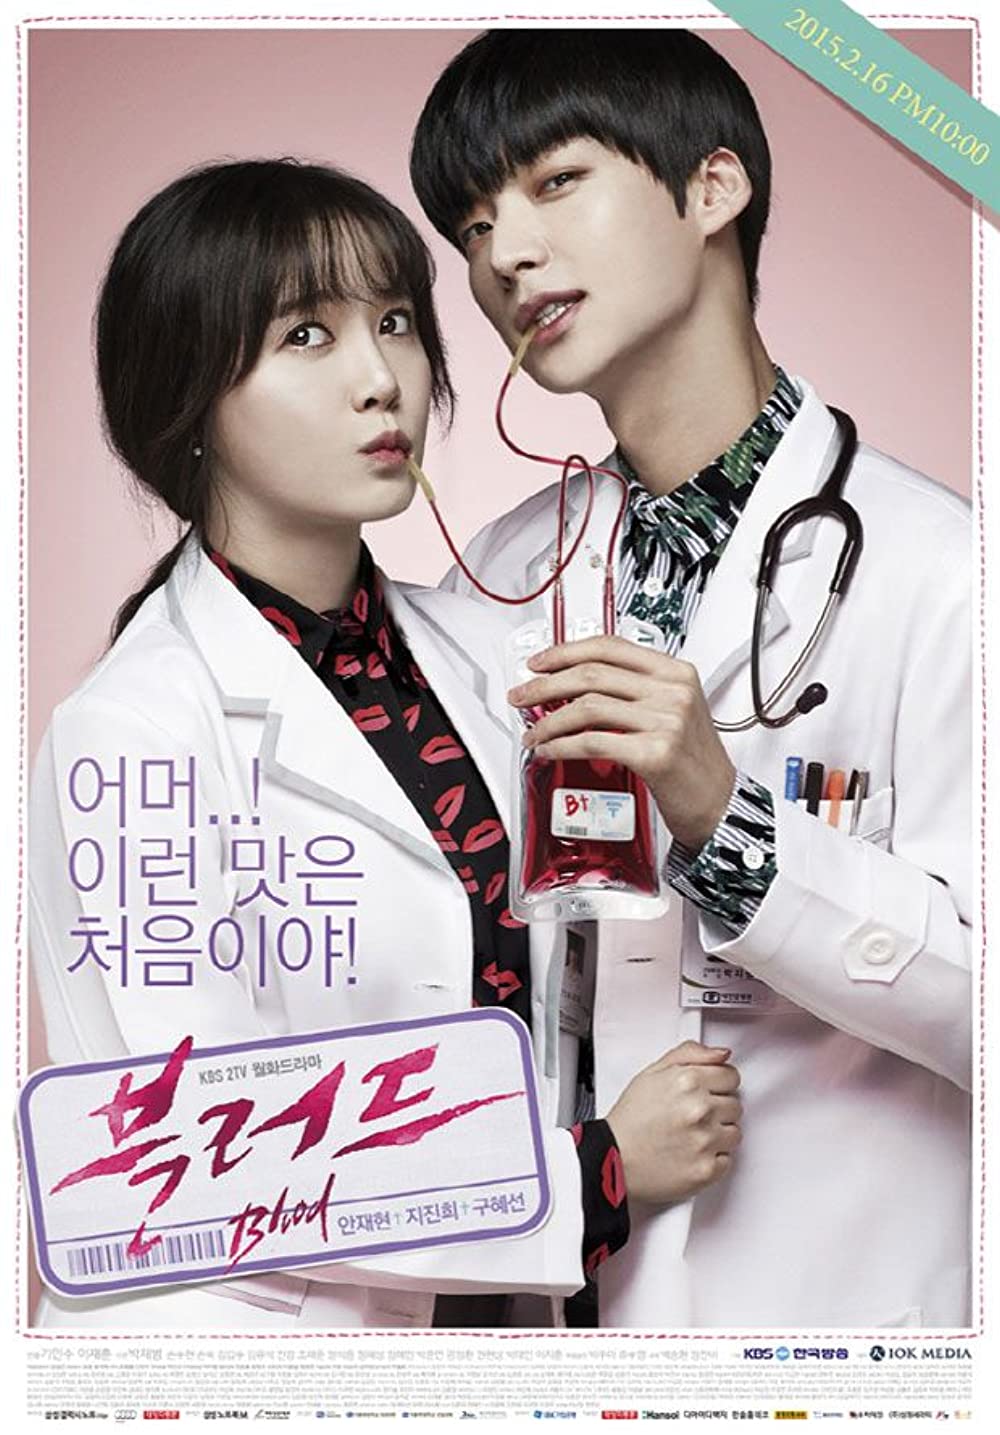 5 Drama Korea fantasi bertema kedokteran, Ghost Doctor bikin heran